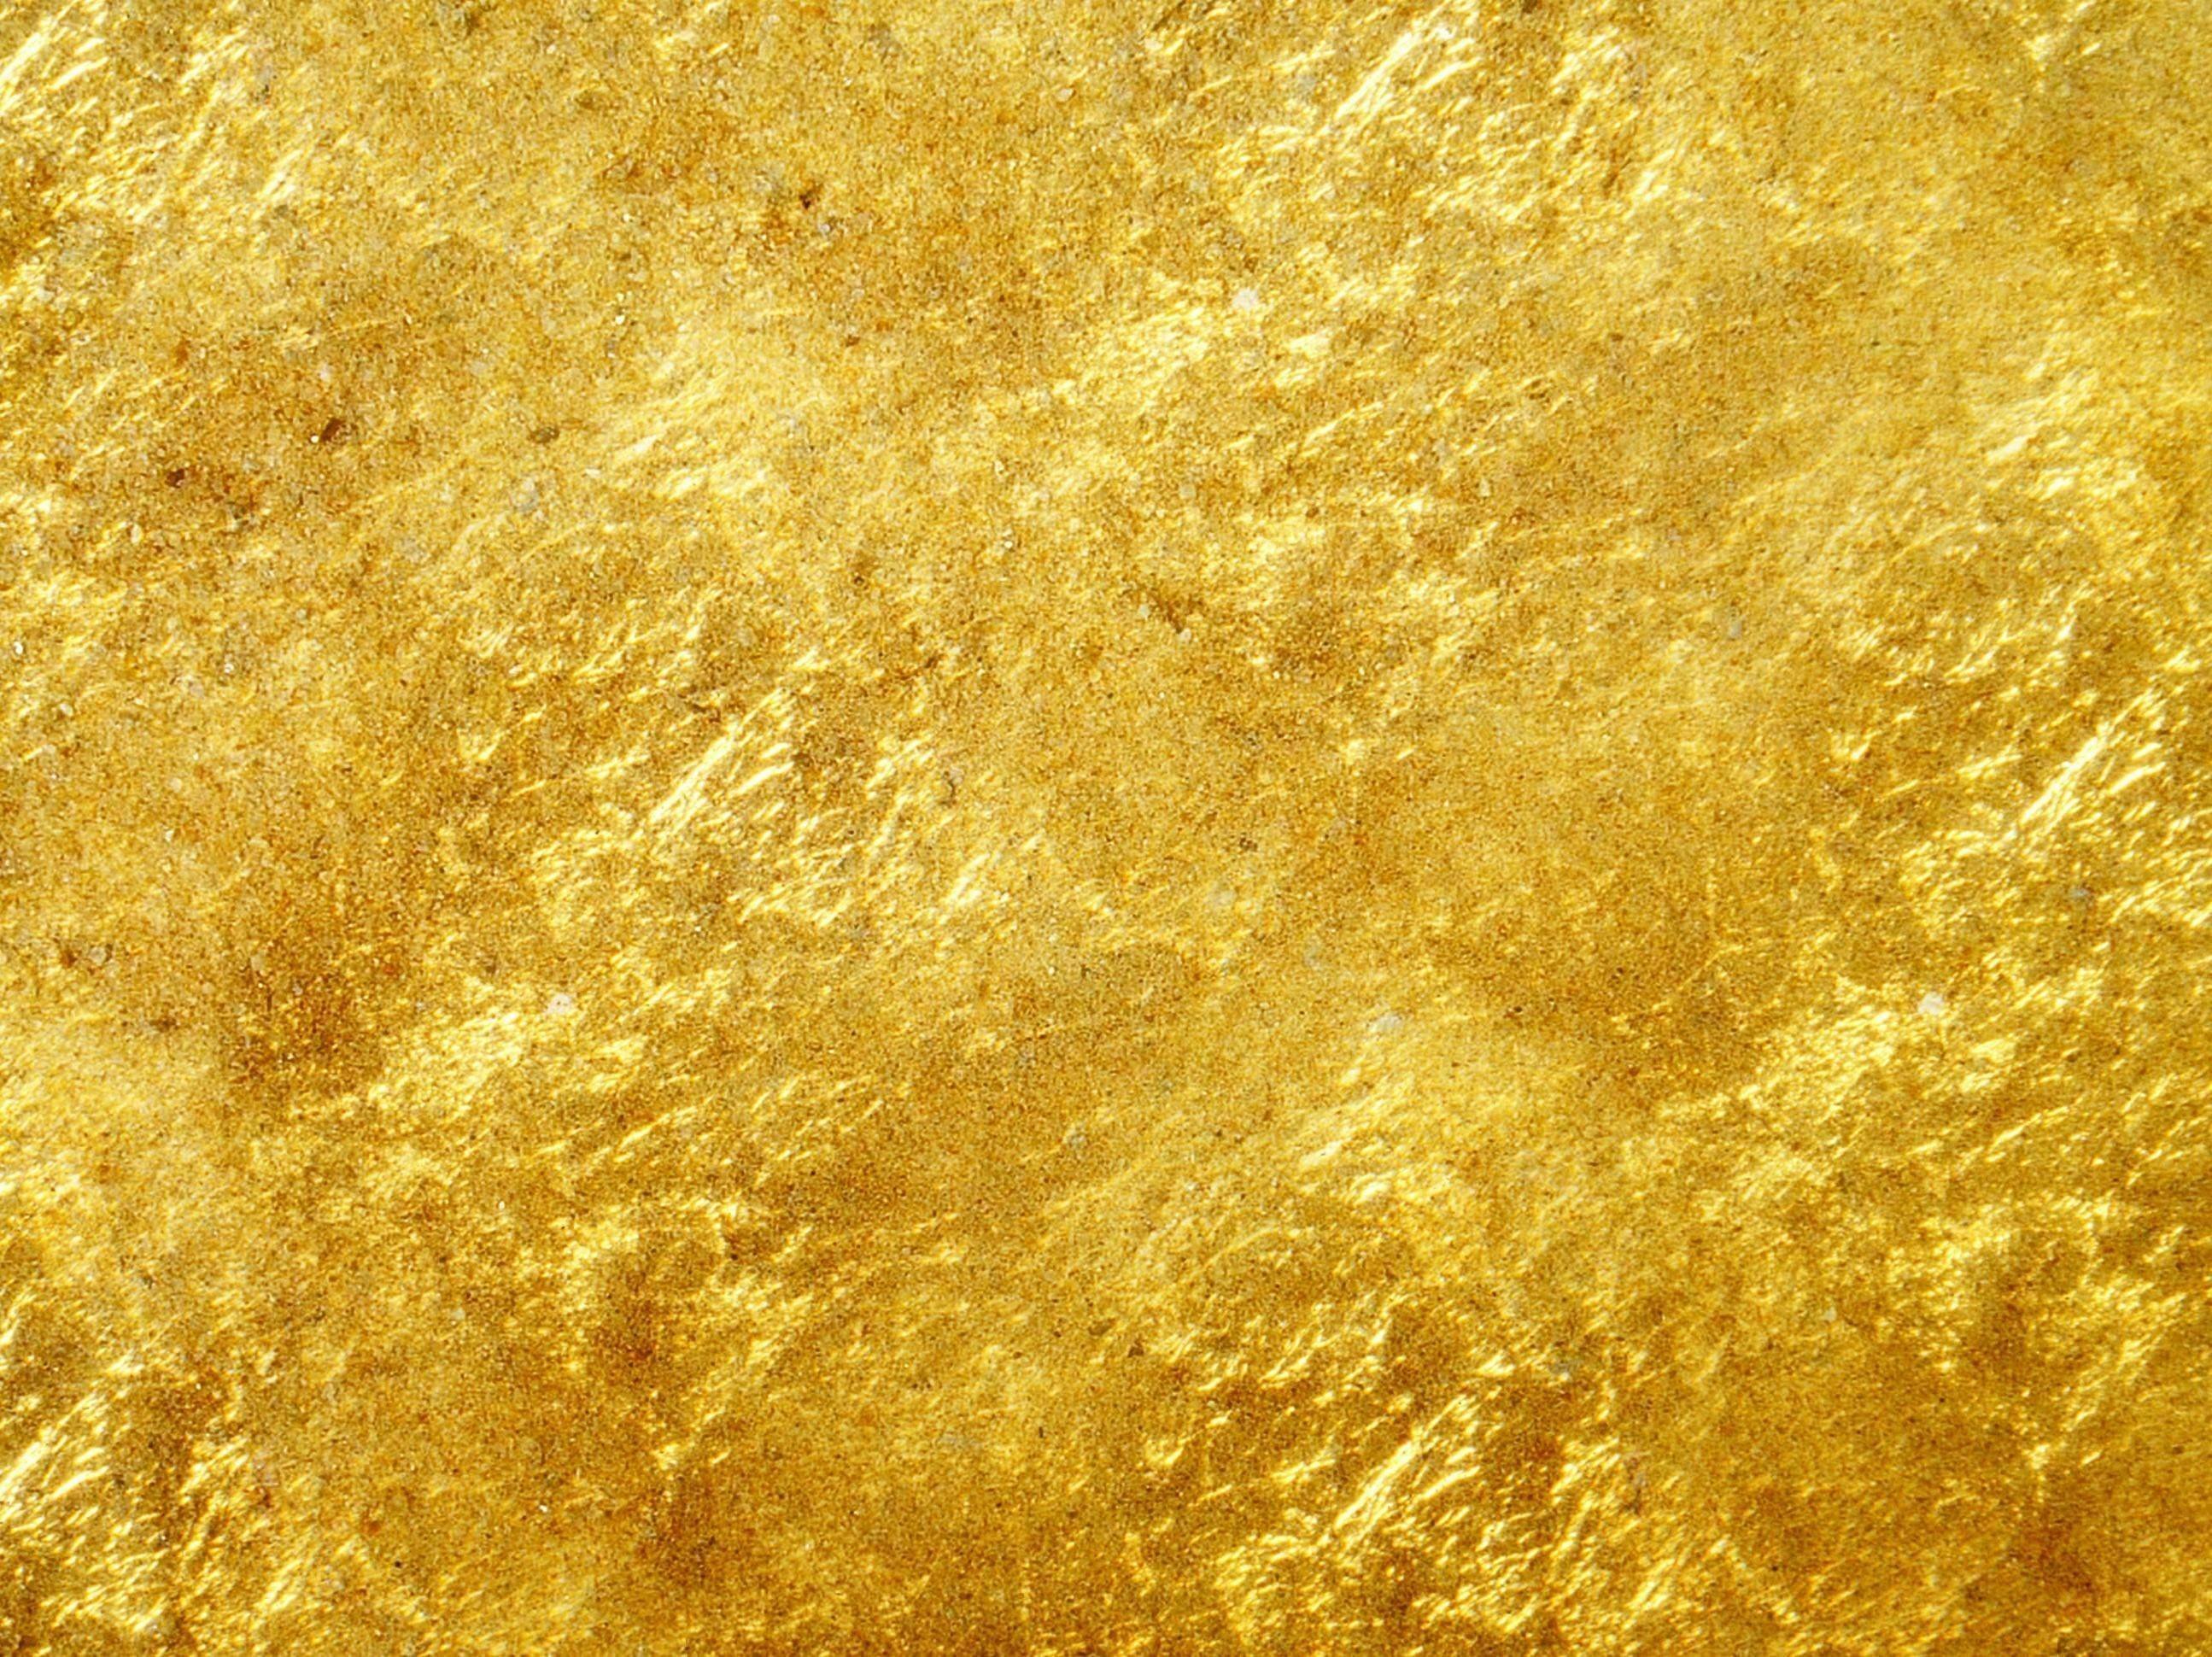 Gold leaf. Золотистый фон. Золото текстура. Состаренное золото. Золото материал.